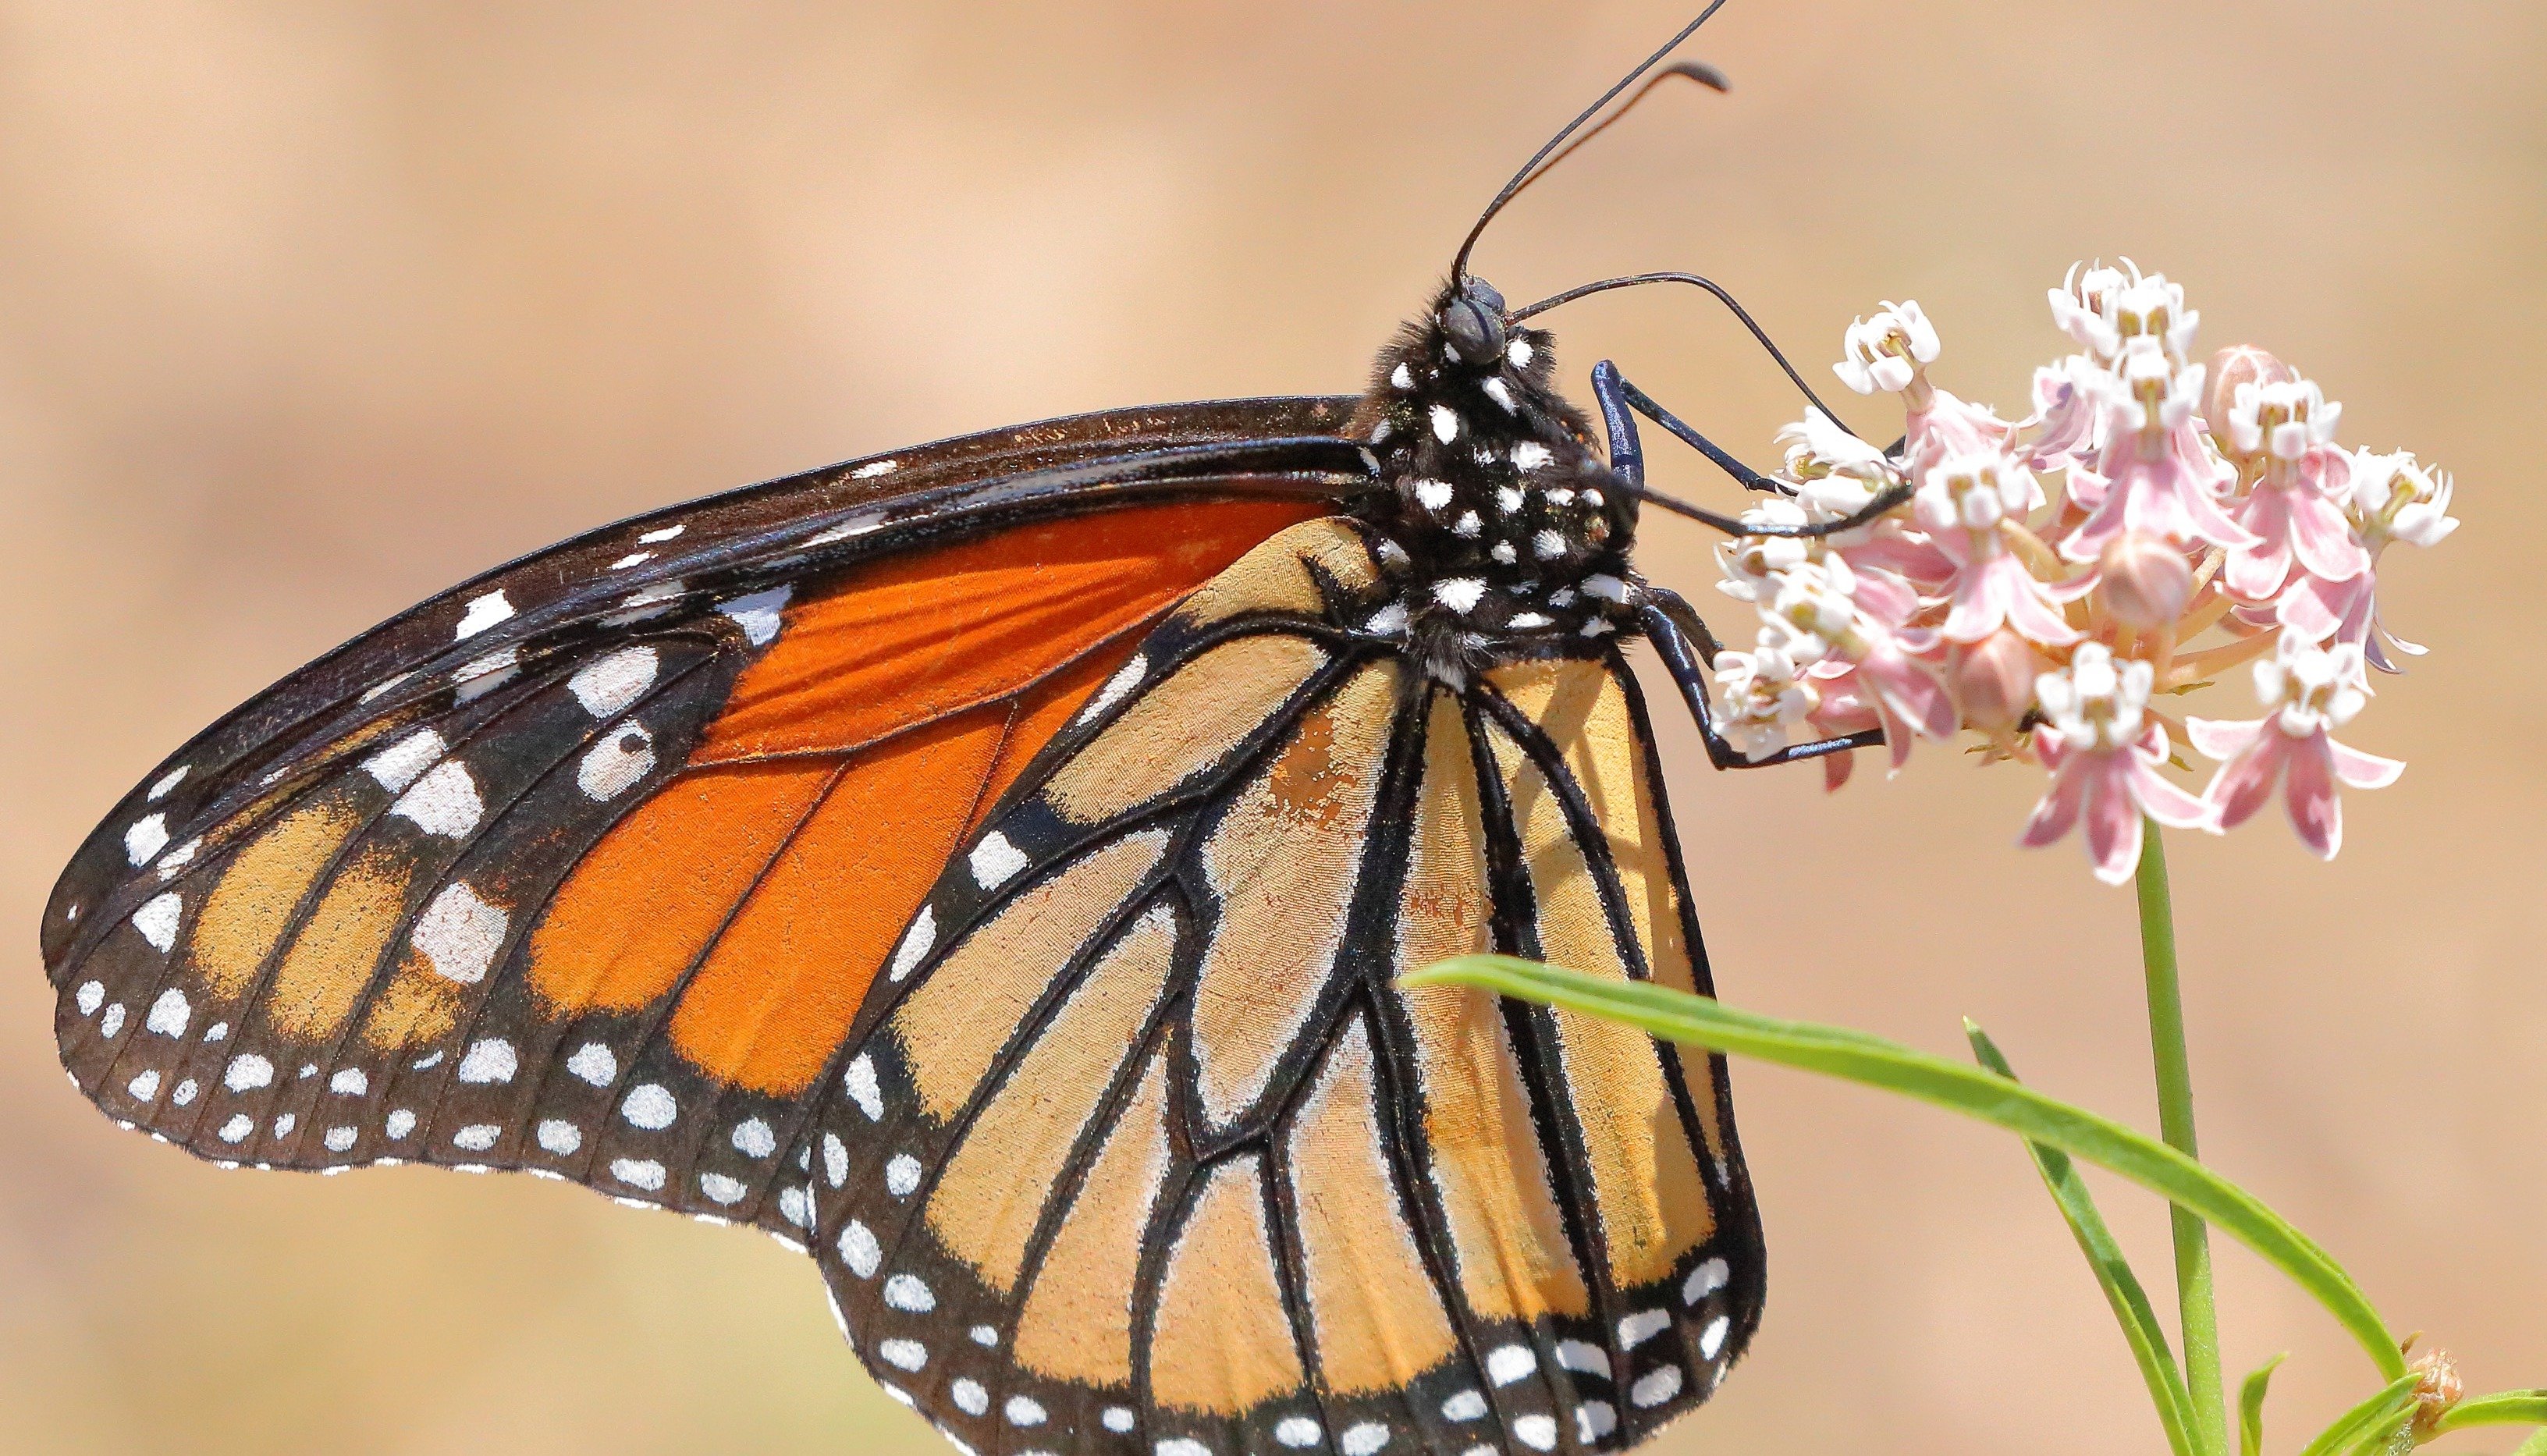 Monarch butterfly resting on milkweed flower